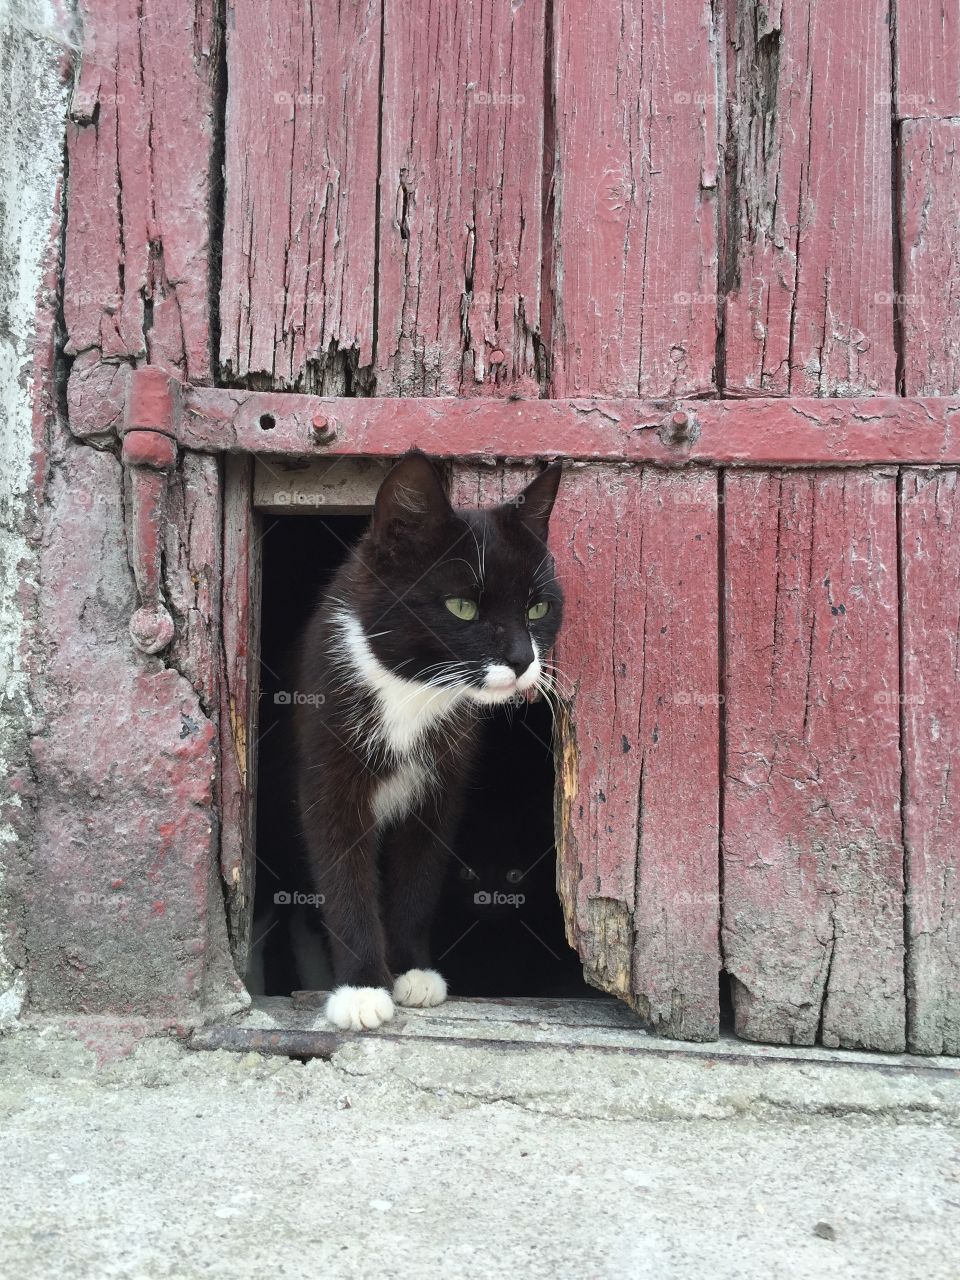 Cat in the barn